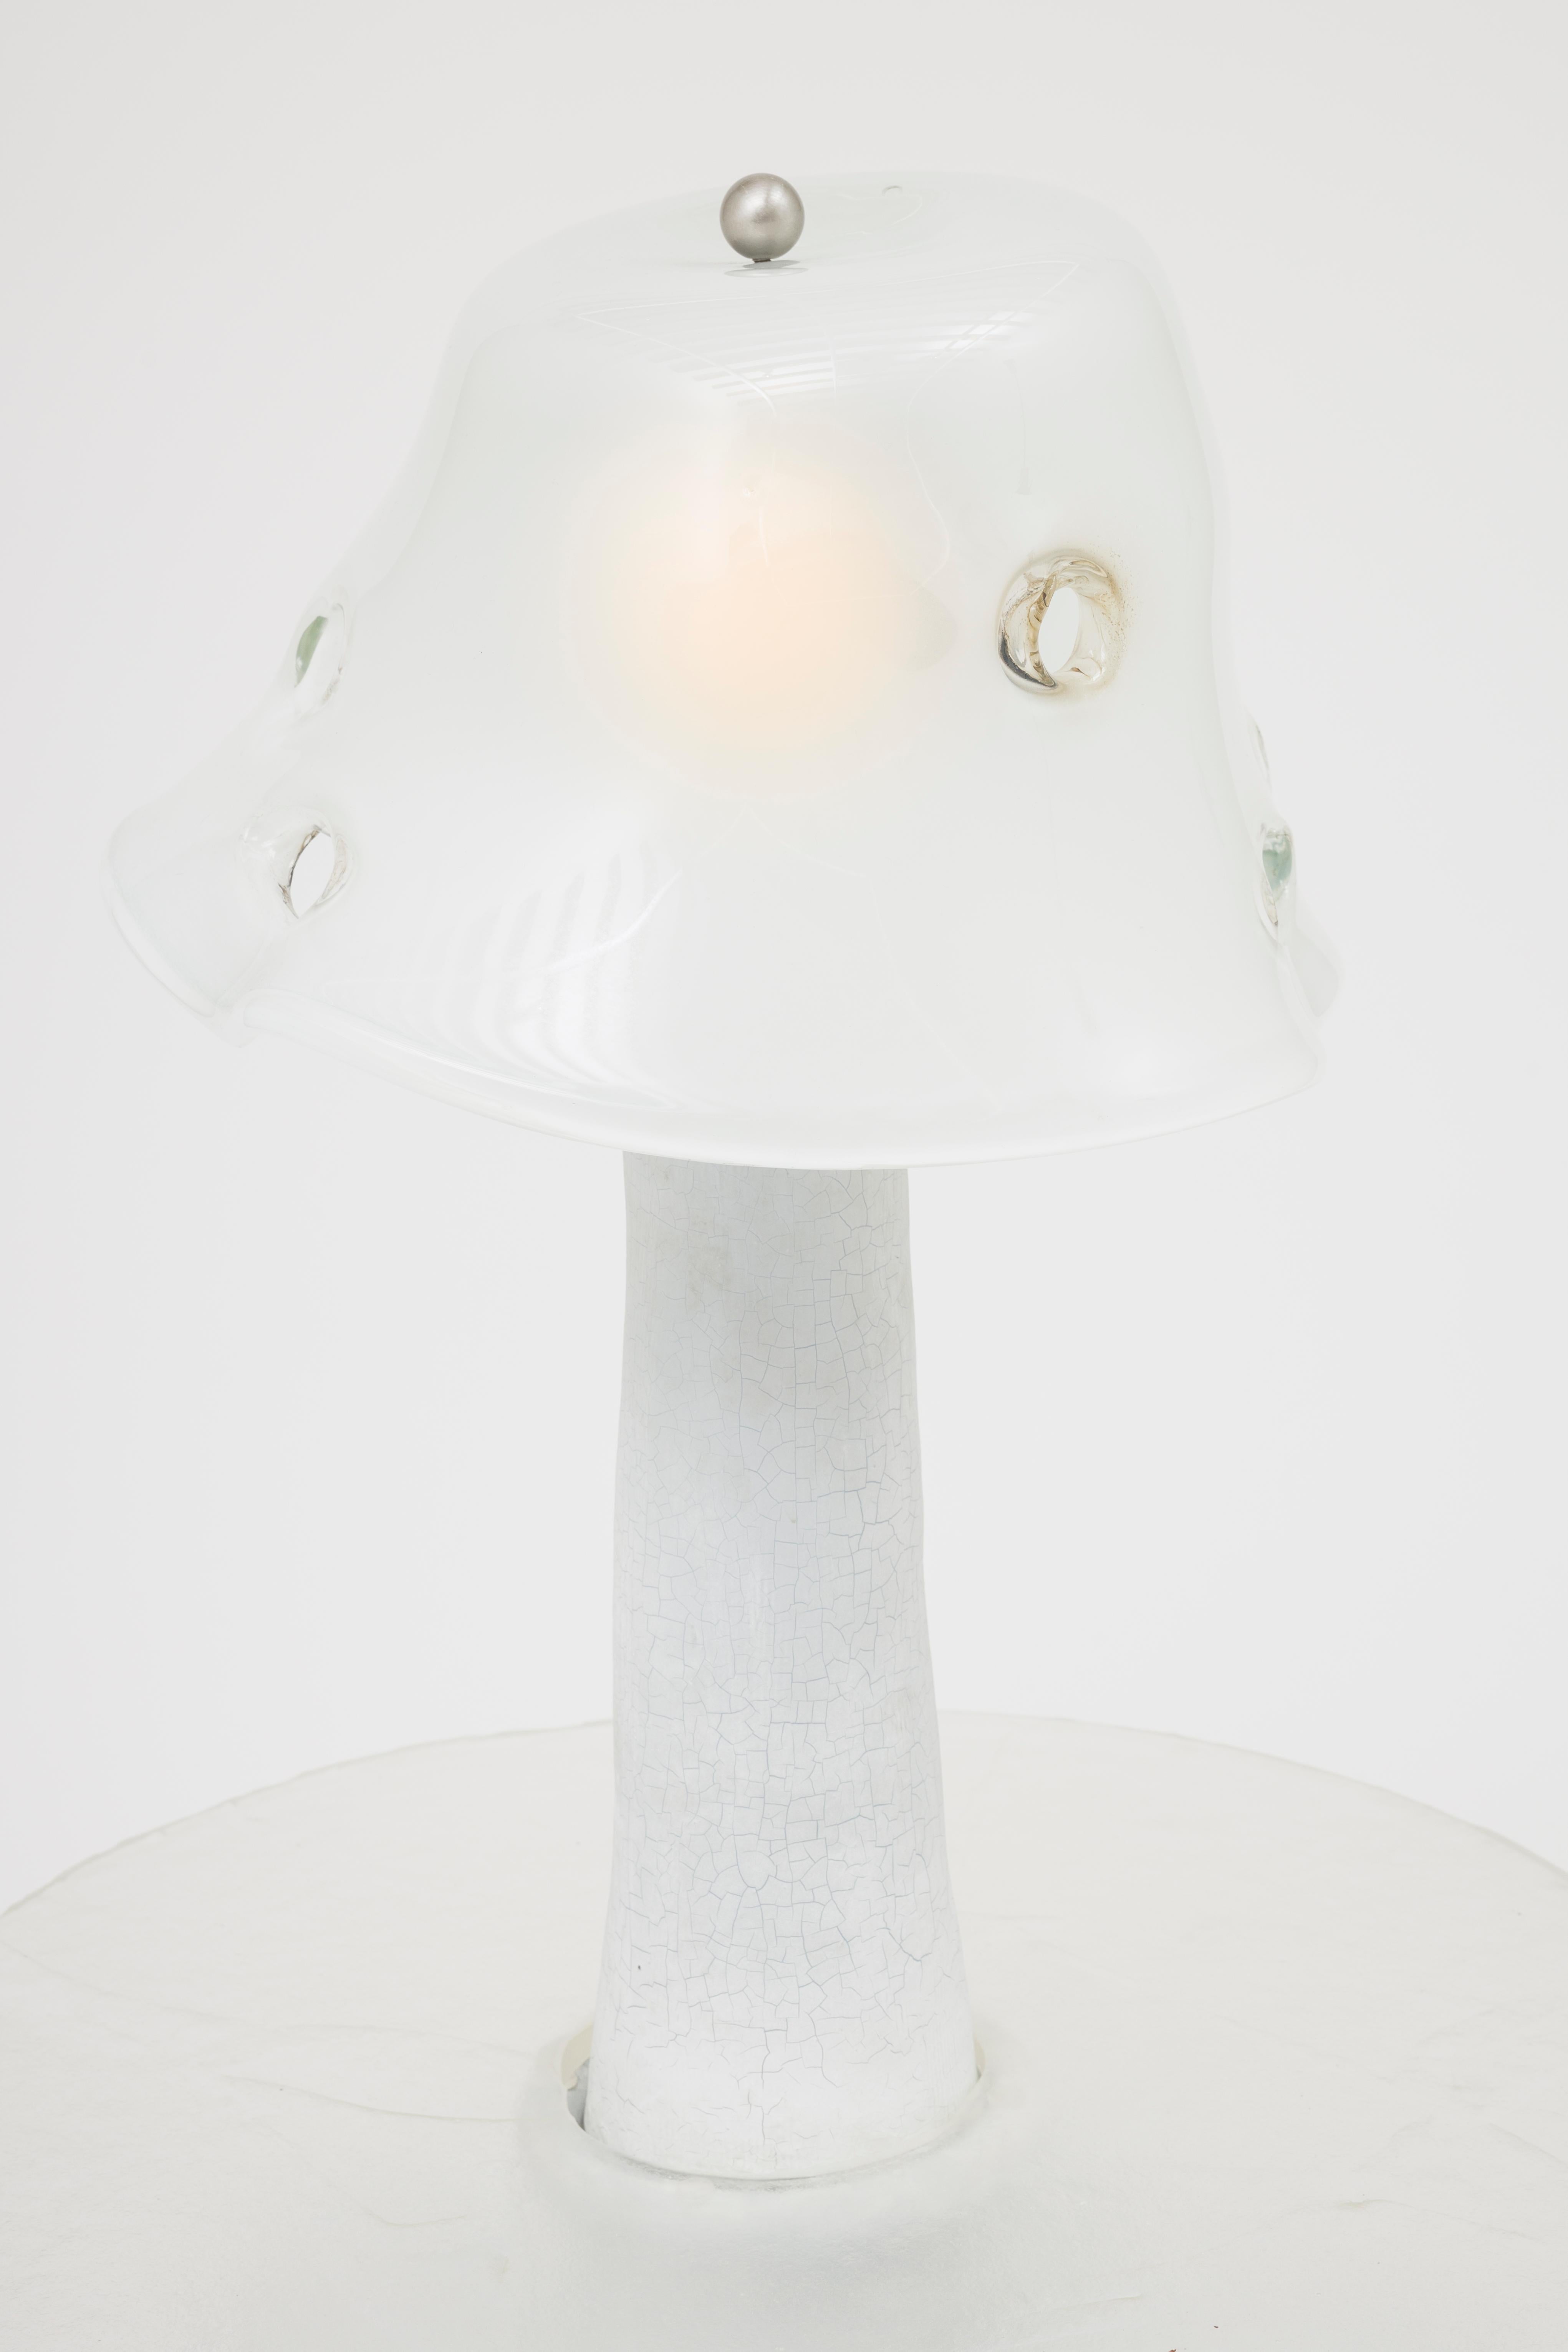 Cast Sculptural Floor Lamp with Table by Ellen Pong